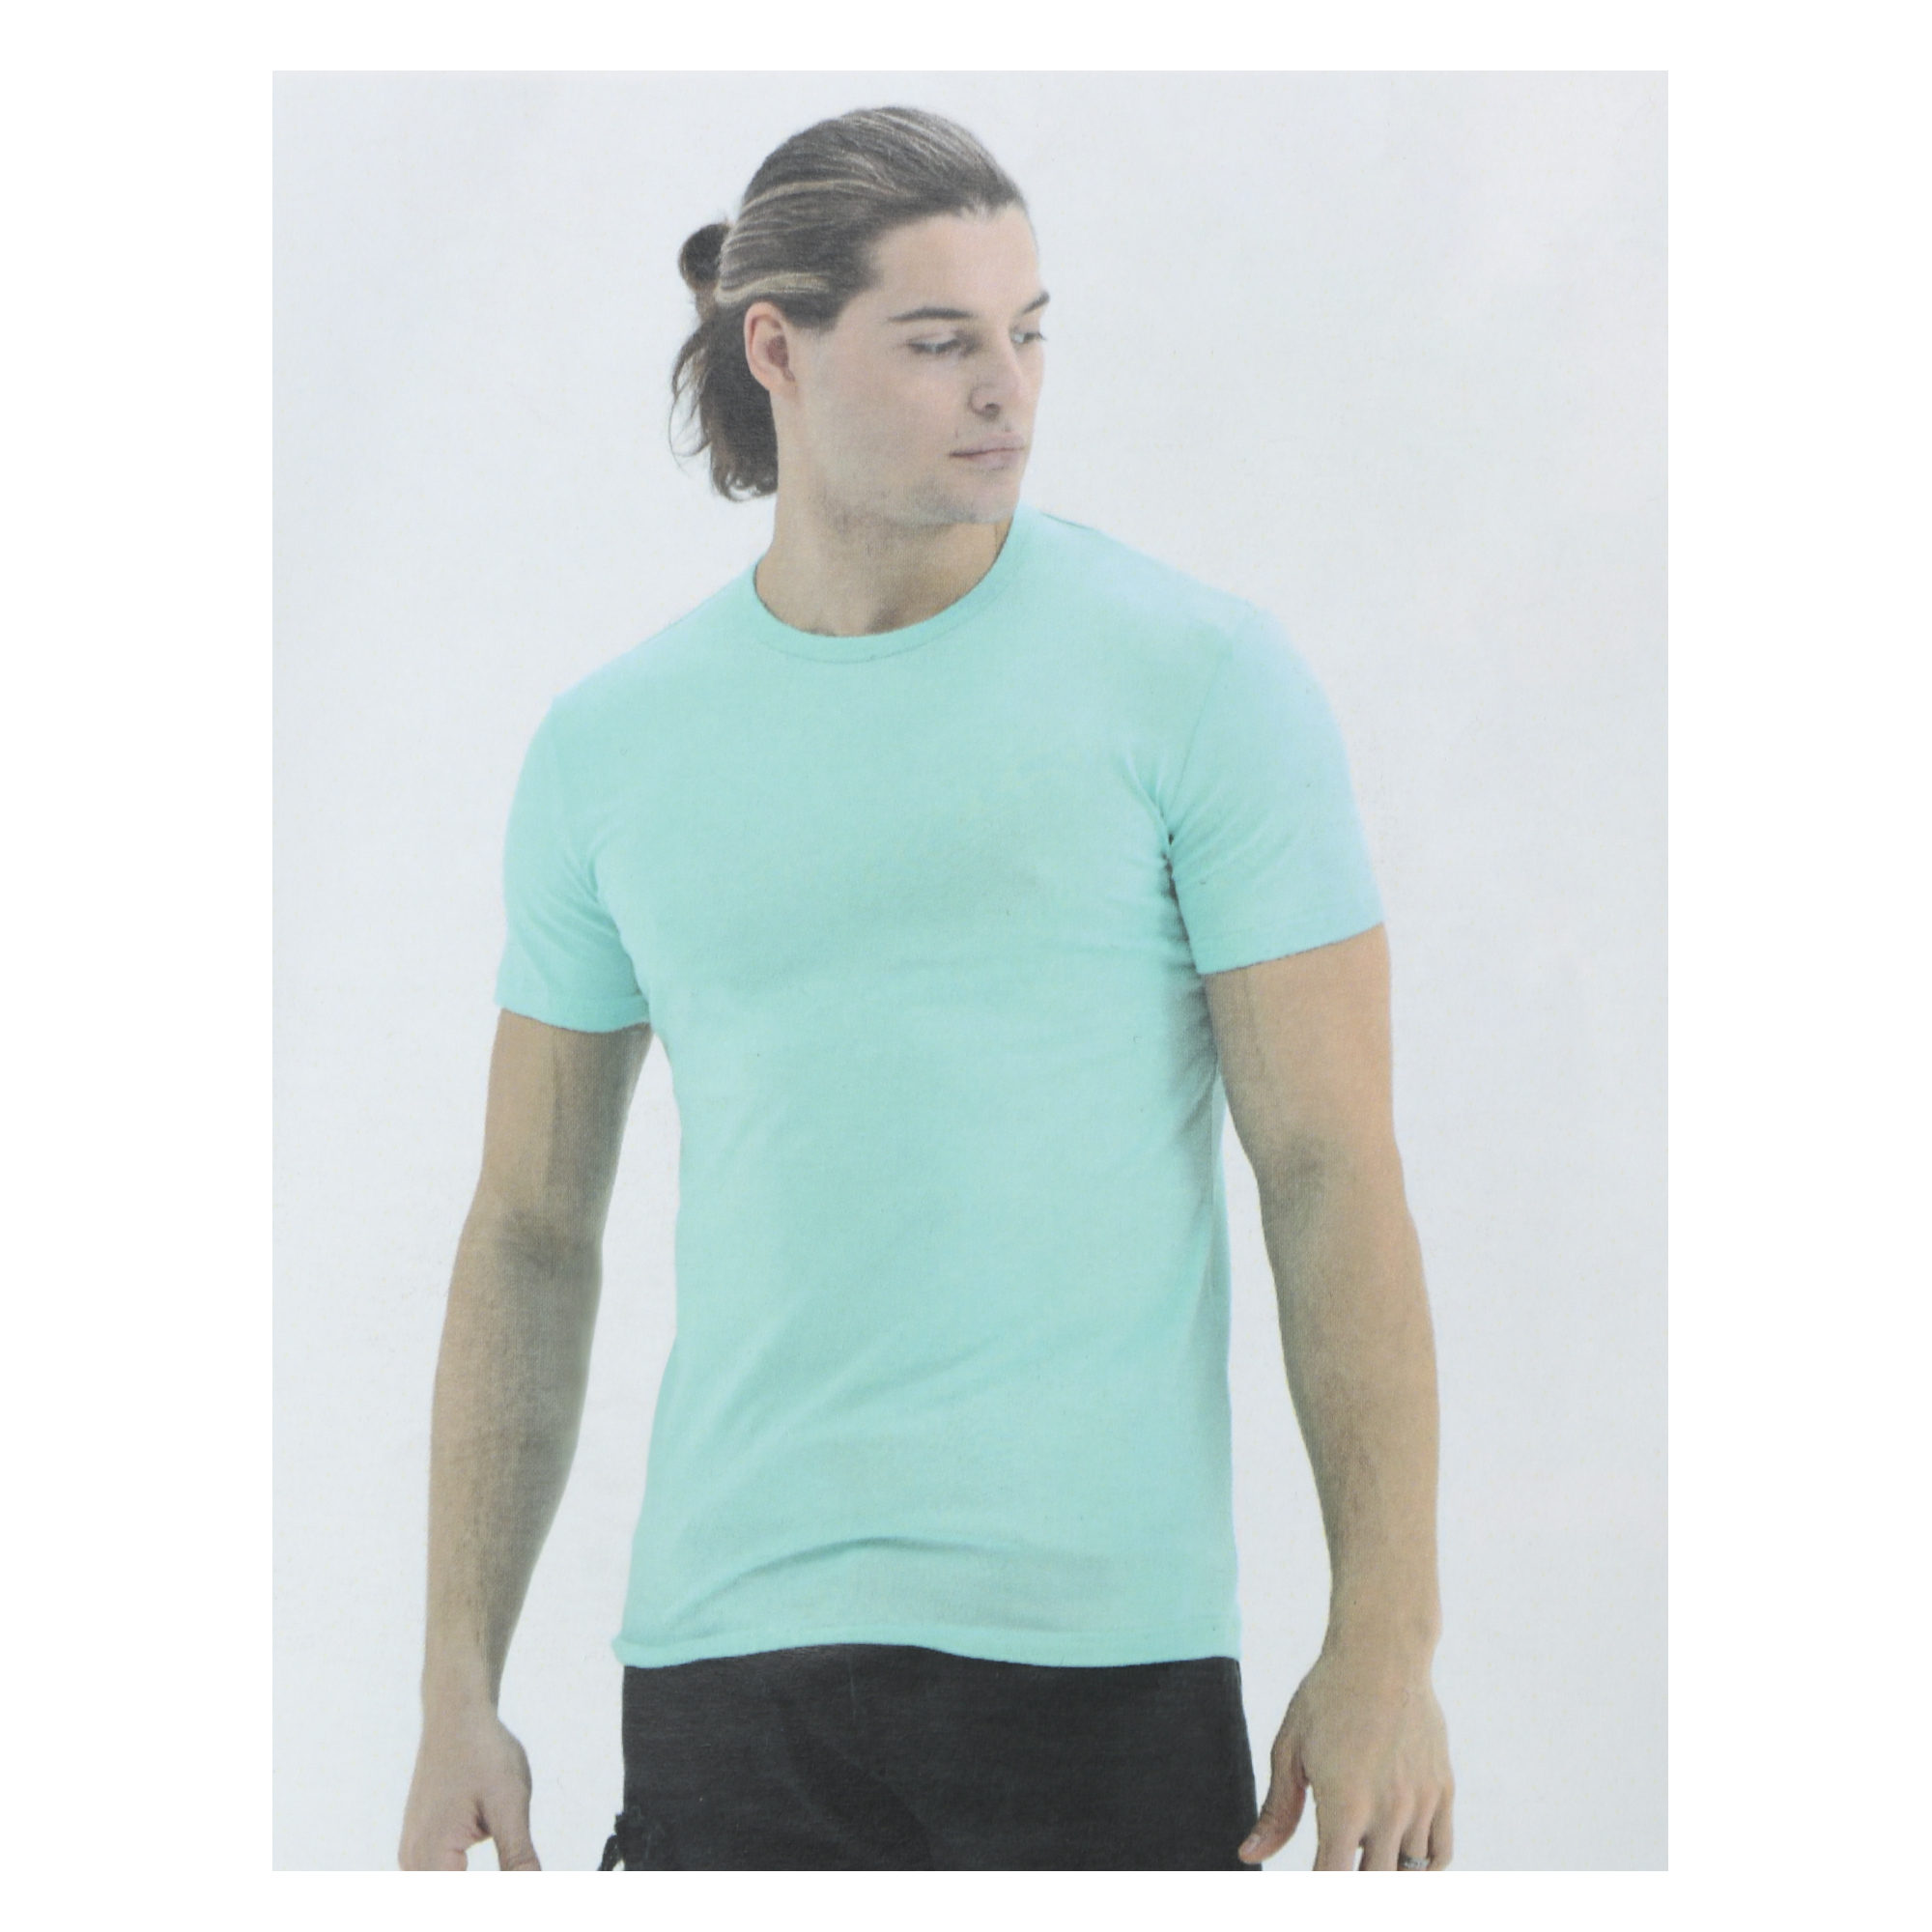 Мужская футболка Pantelemone MF-913 48 ментоловая, цвет ментоловый, размер 48 - фото 2